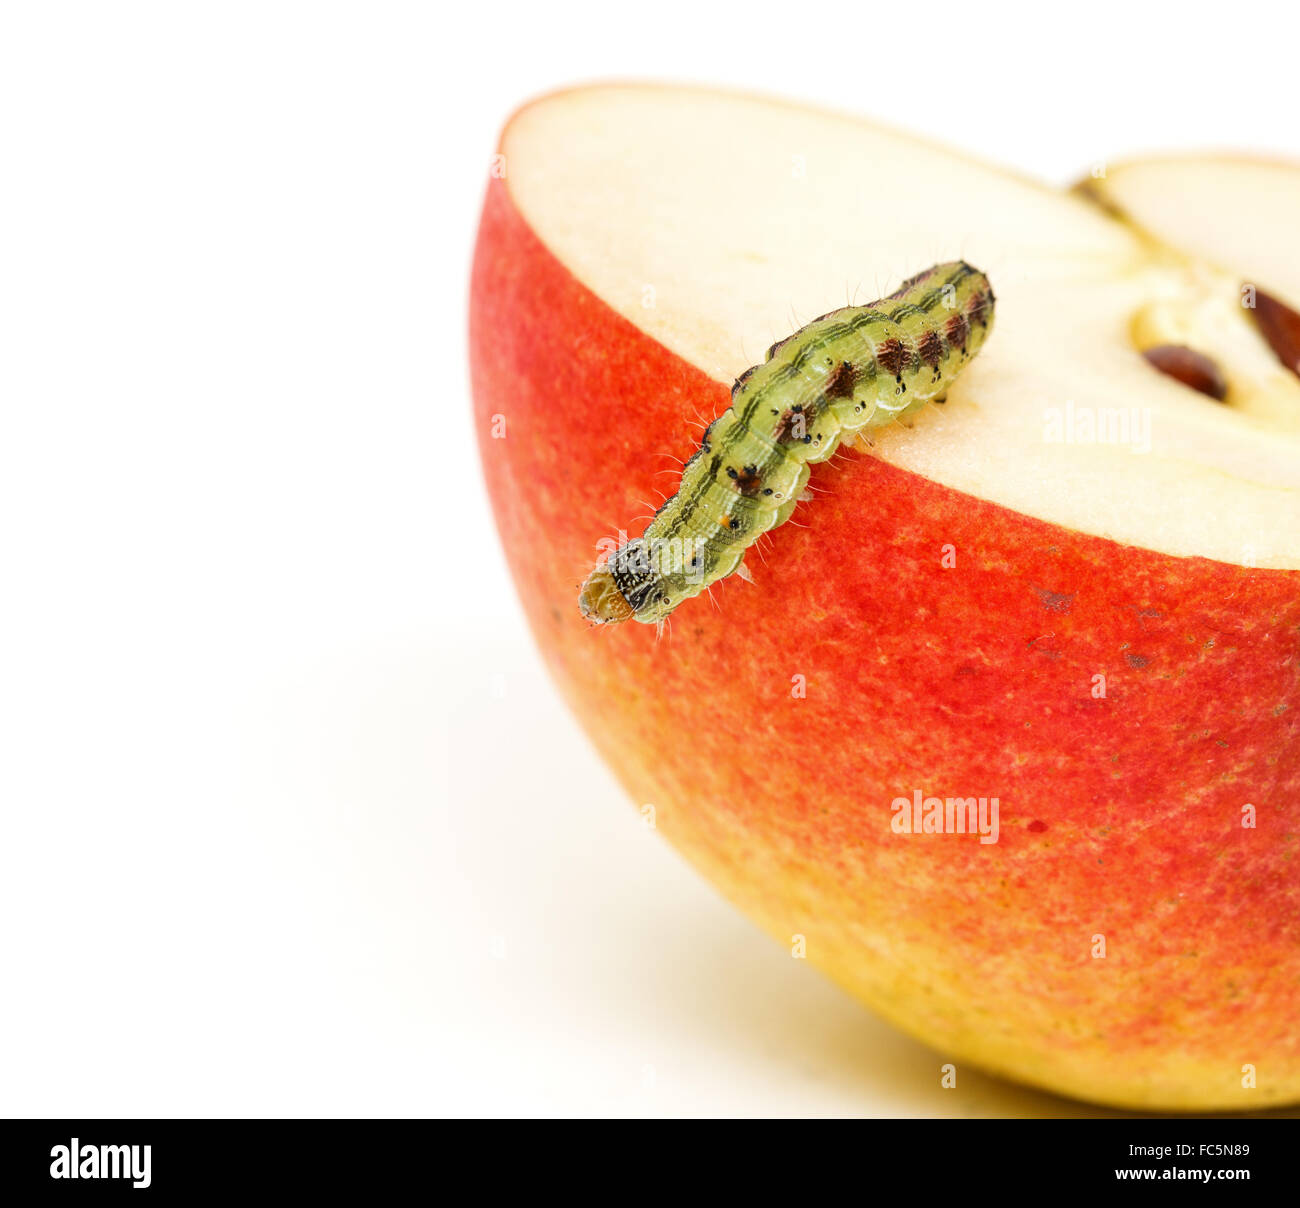 Green Caterpillar Creeps on Red Apple Stock Photo